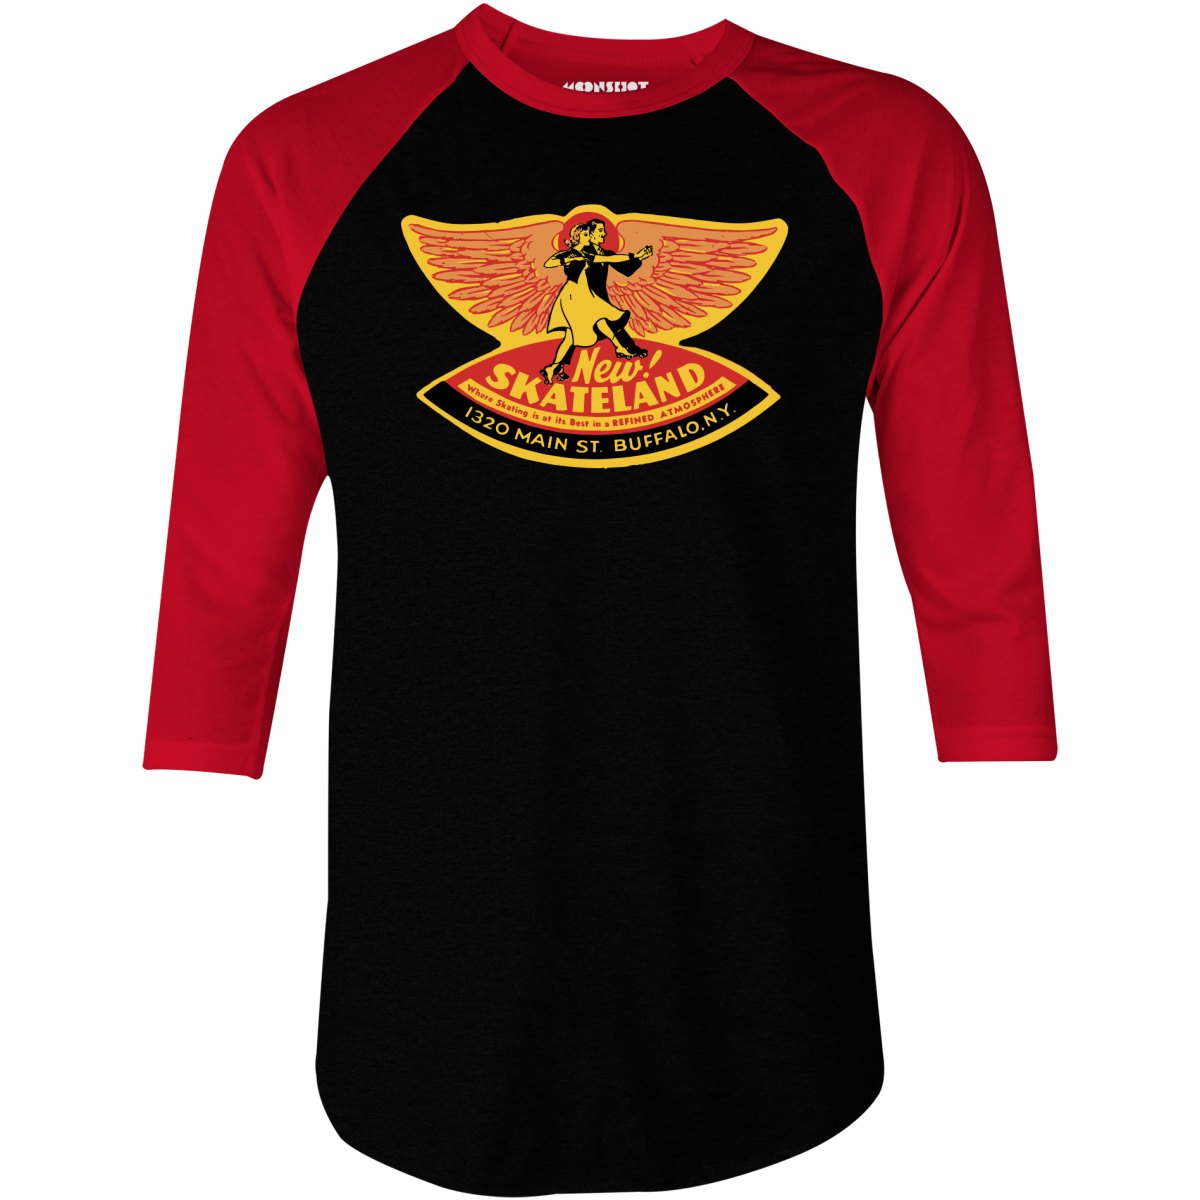 New Skateland - Buffalo, NY - Vintage Roller Rink - 3/4 Sleeve Raglan T-Shirt